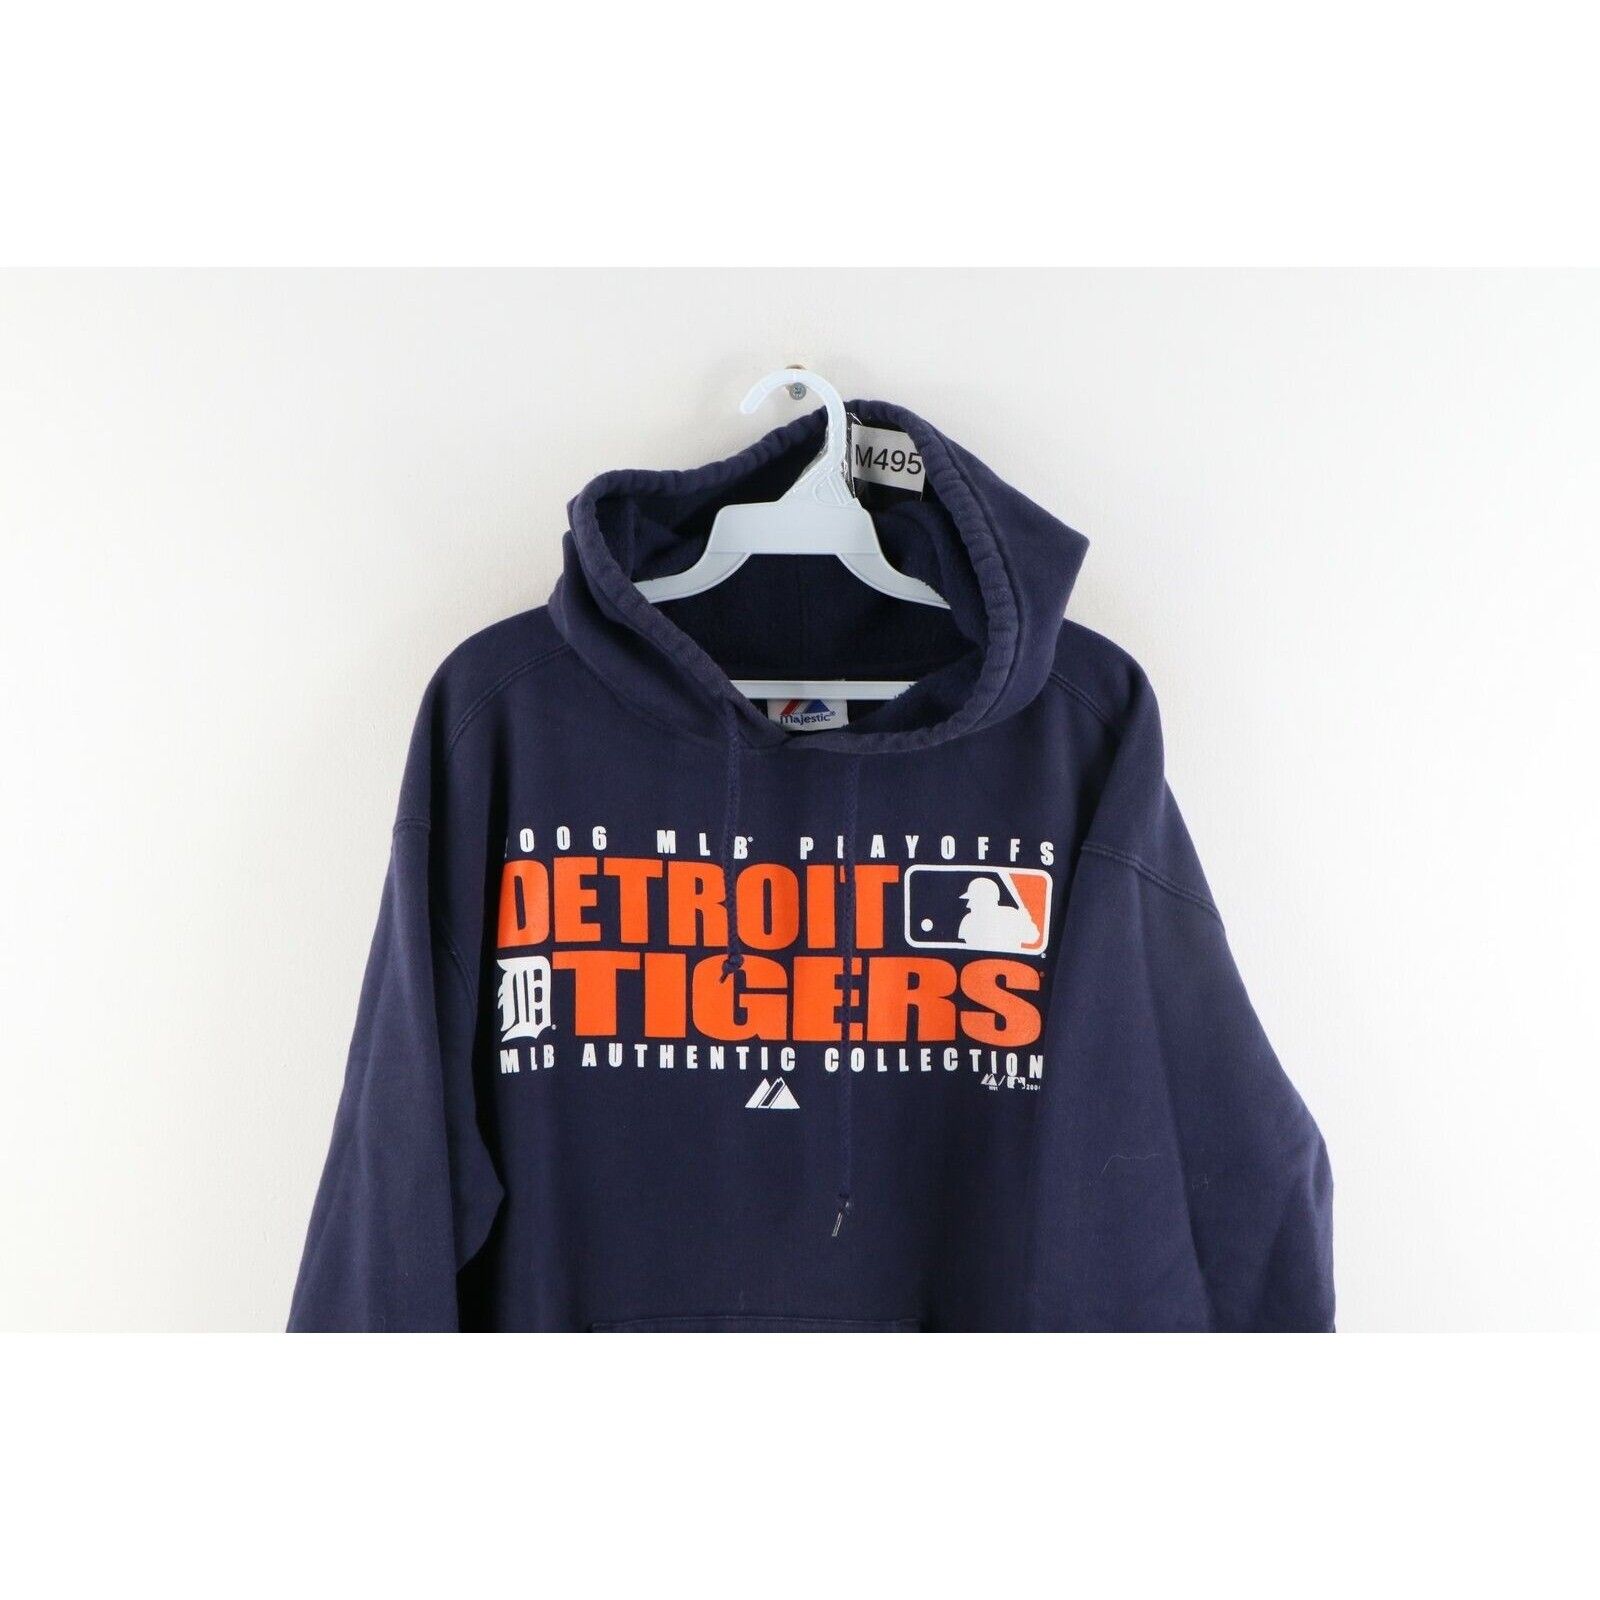 Vintage Vintage Majestic Detroit Tigers 2006 Playoffs Faded Hoodie Size US L / EU 52-54 / 3 - 2 Preview